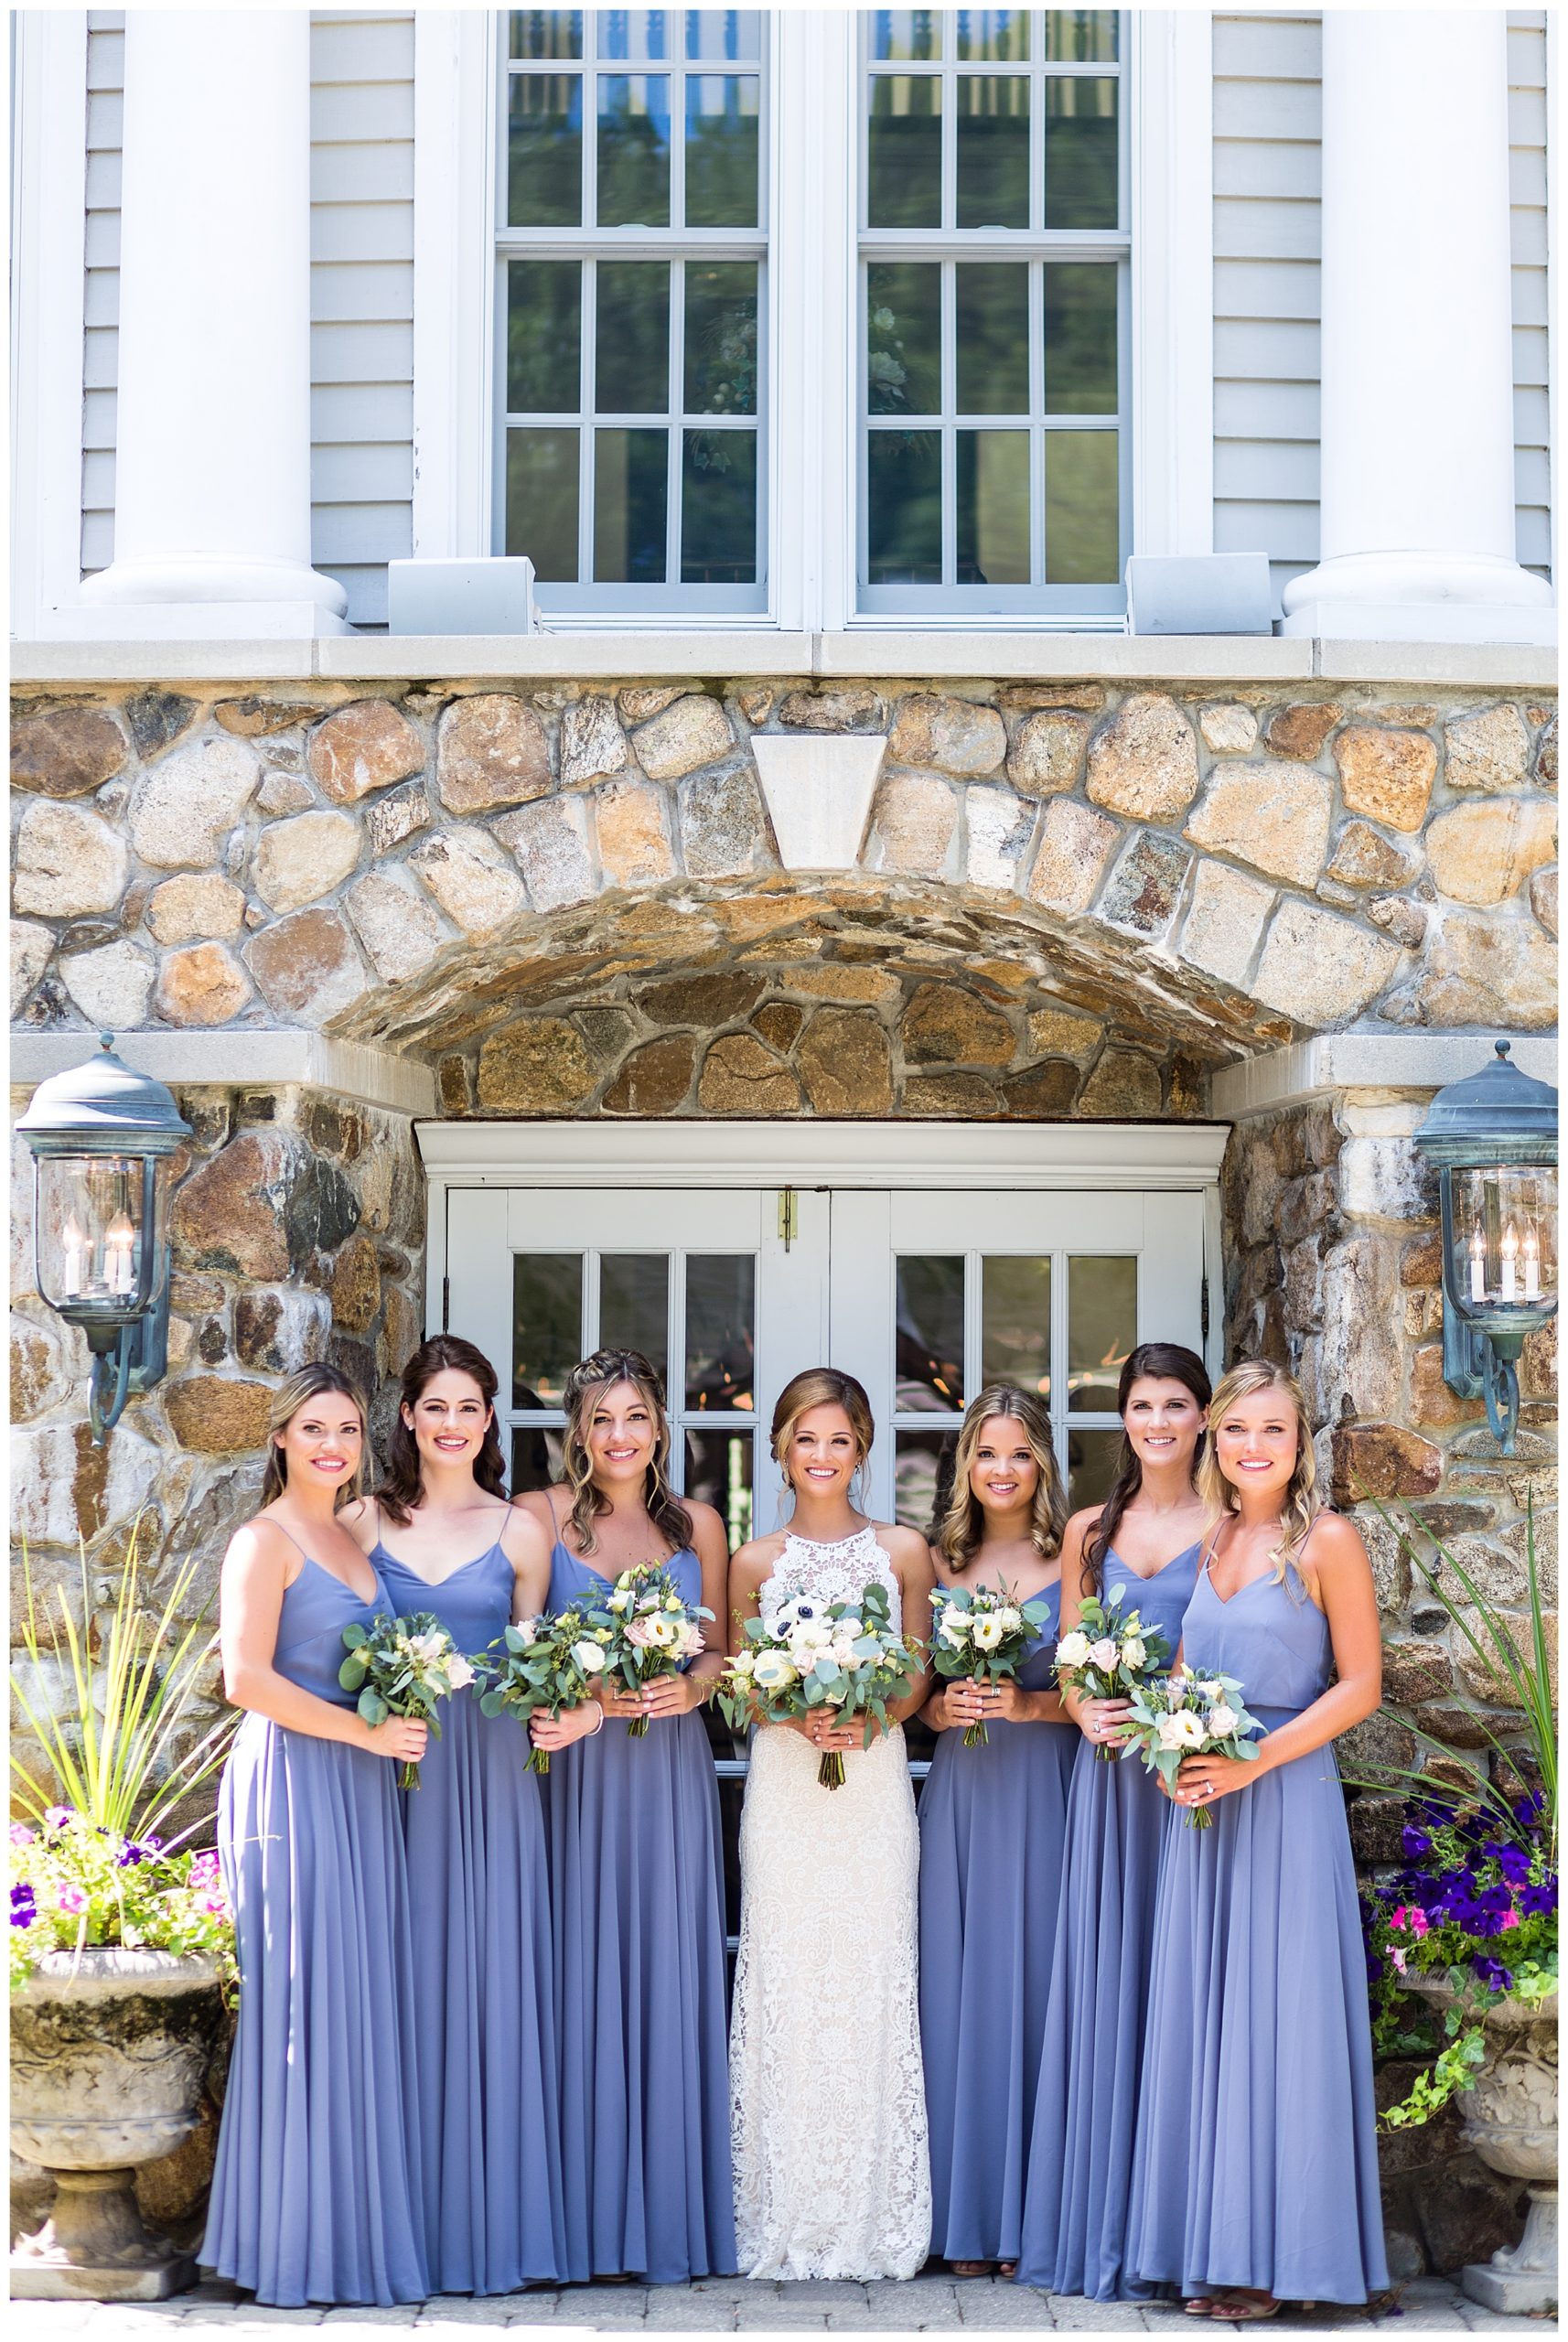 Traditional bridal party portrait with pale blue bridesmaids dresses